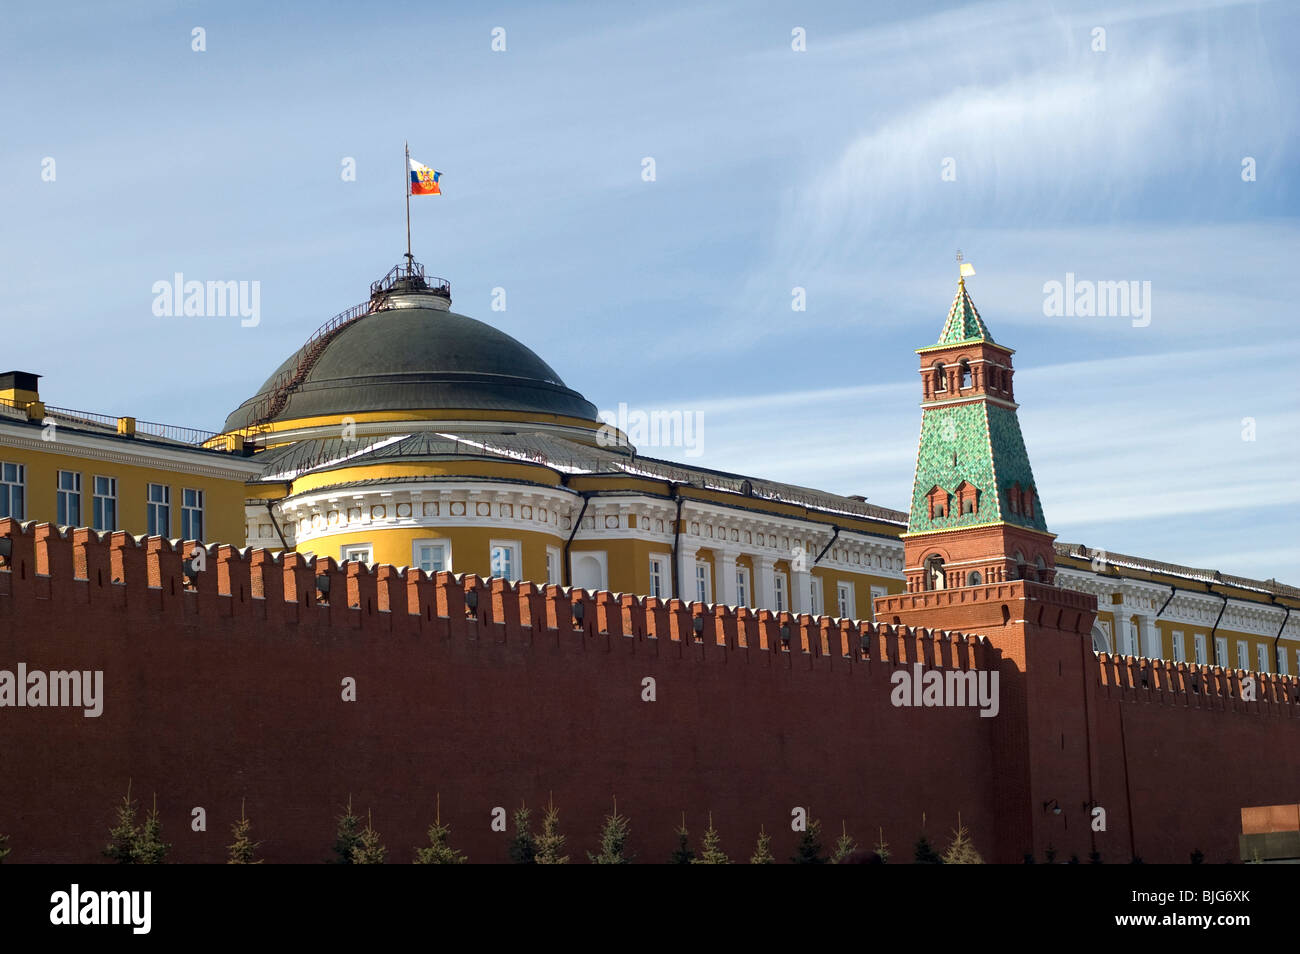 The kremlin was built in